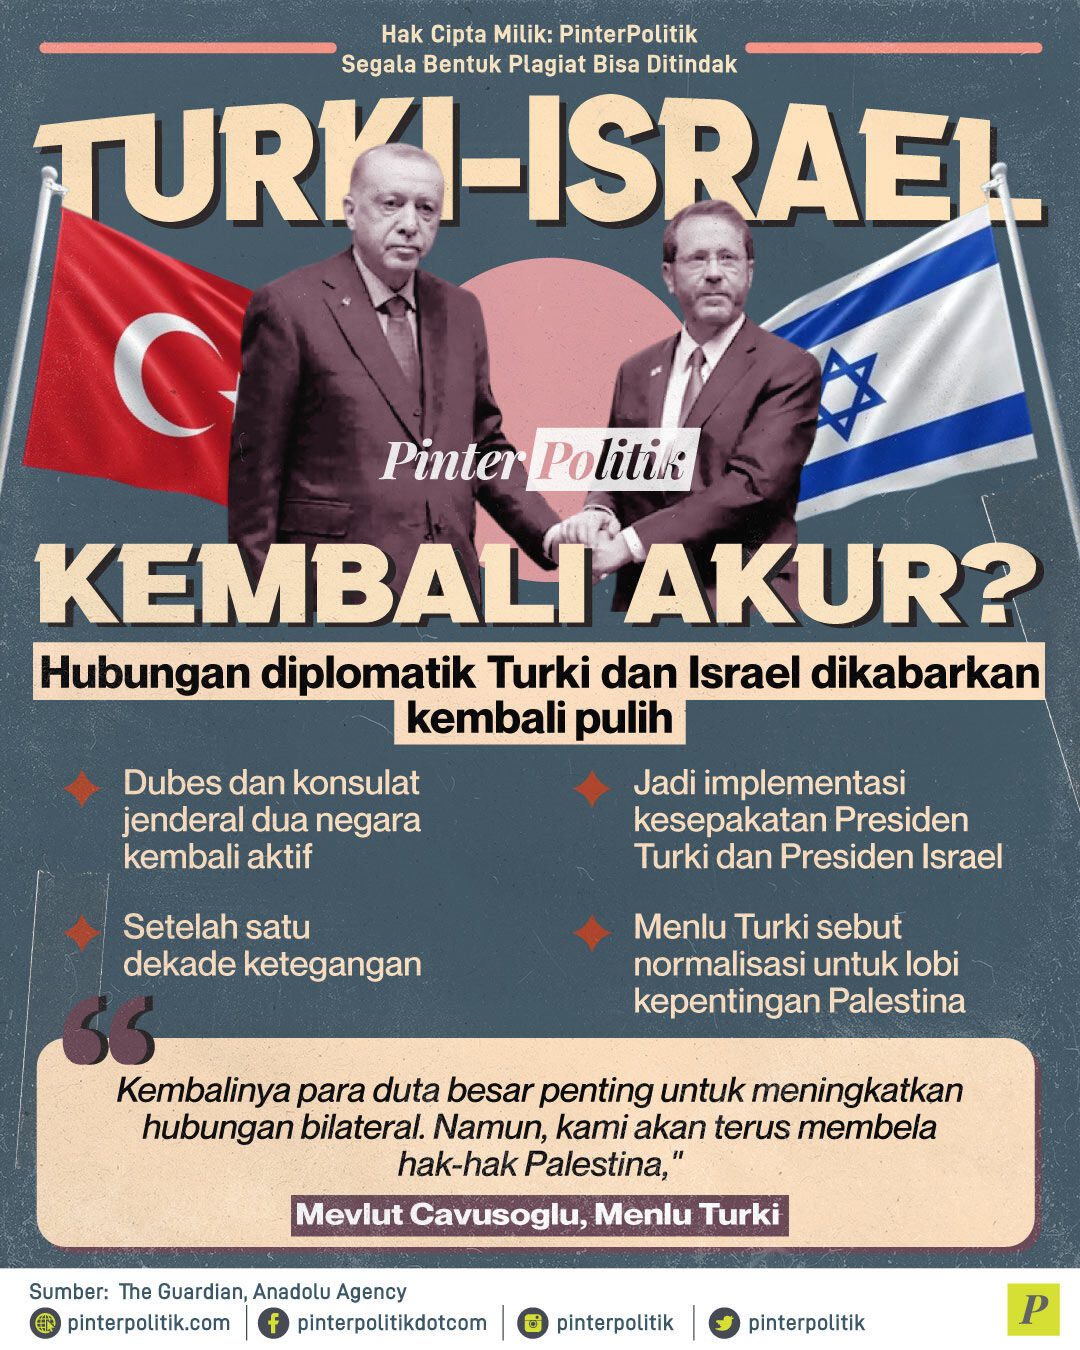 Turki Israel Kembali Akur